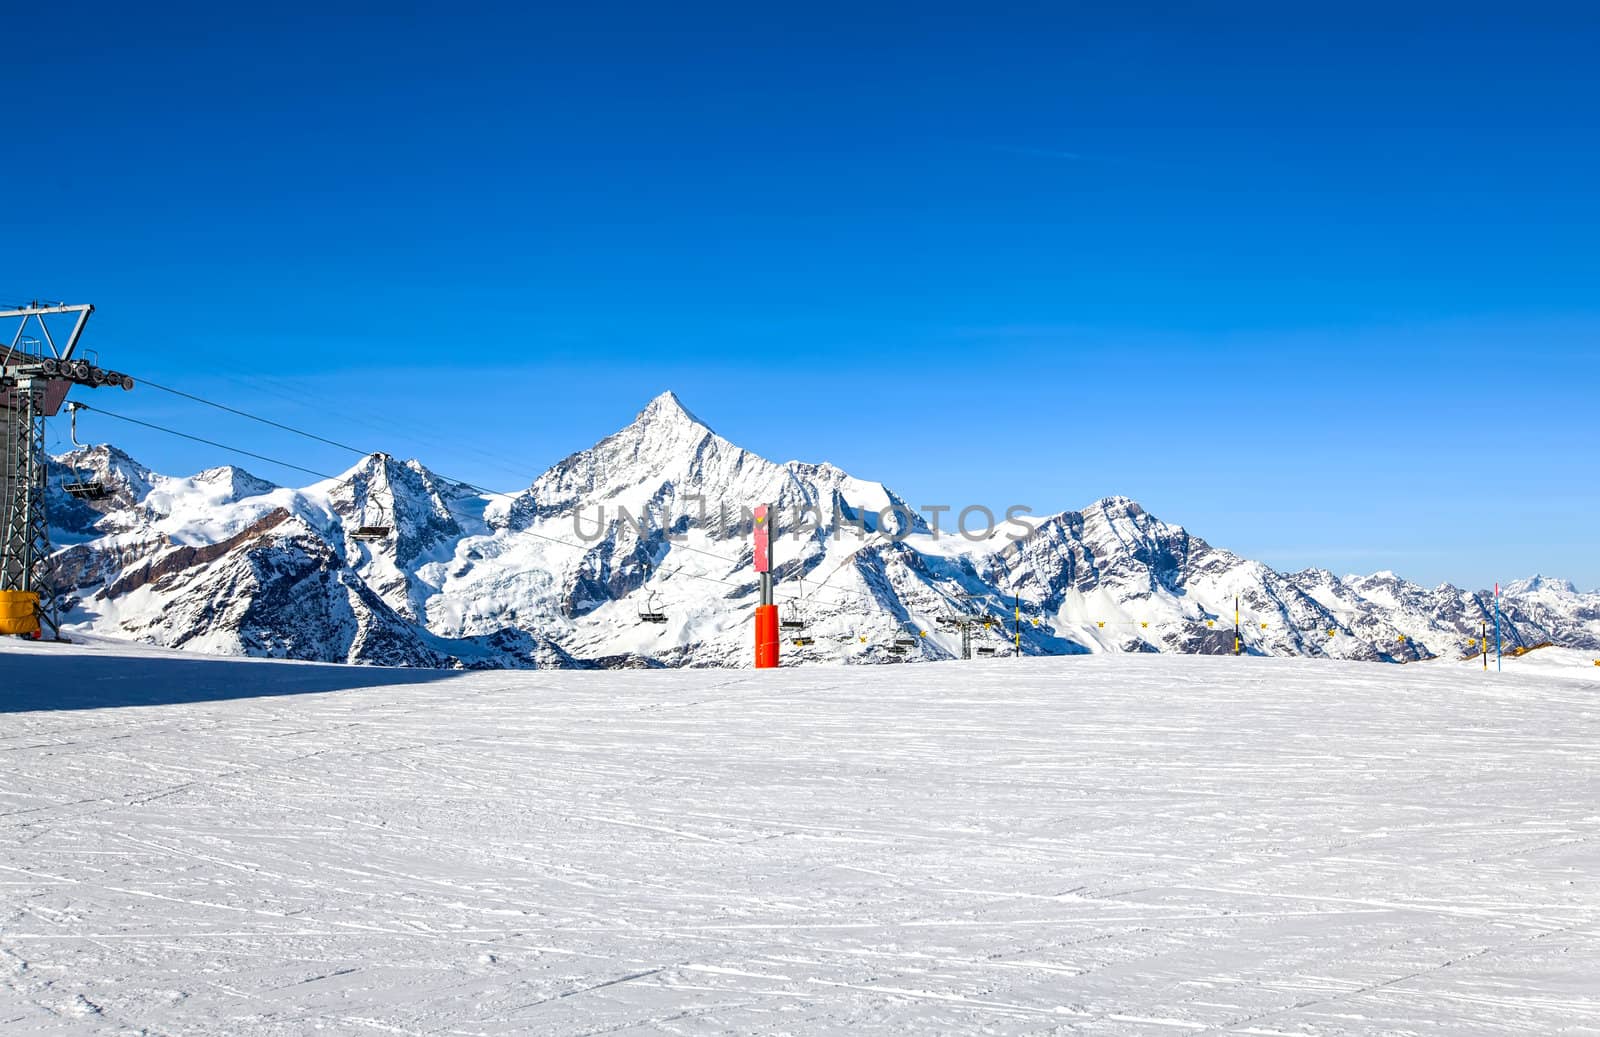 Ski lift in Zermatt in Switzerland by RawGroup